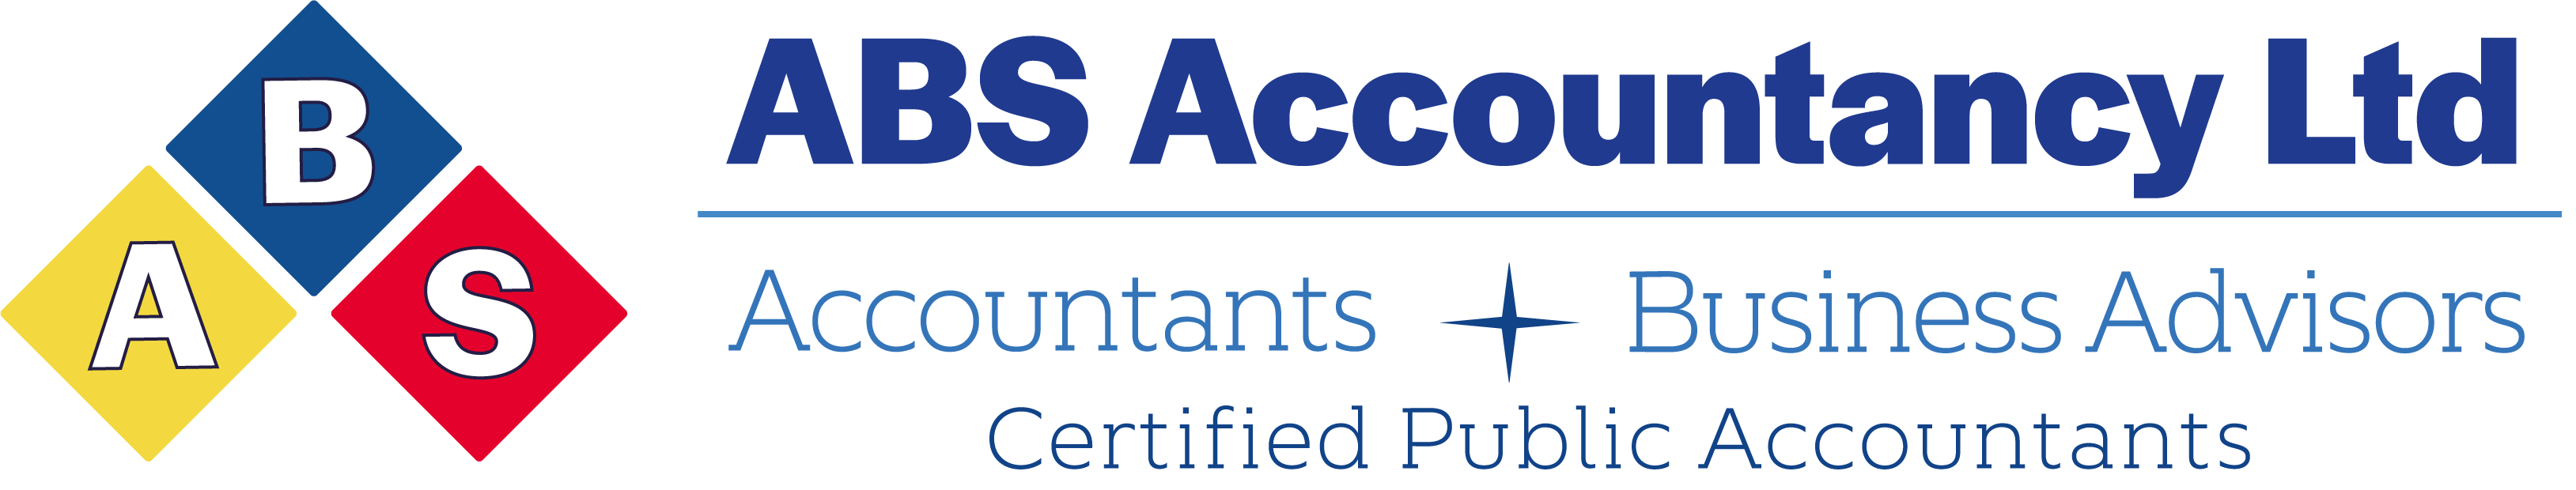 ABS Accountancy